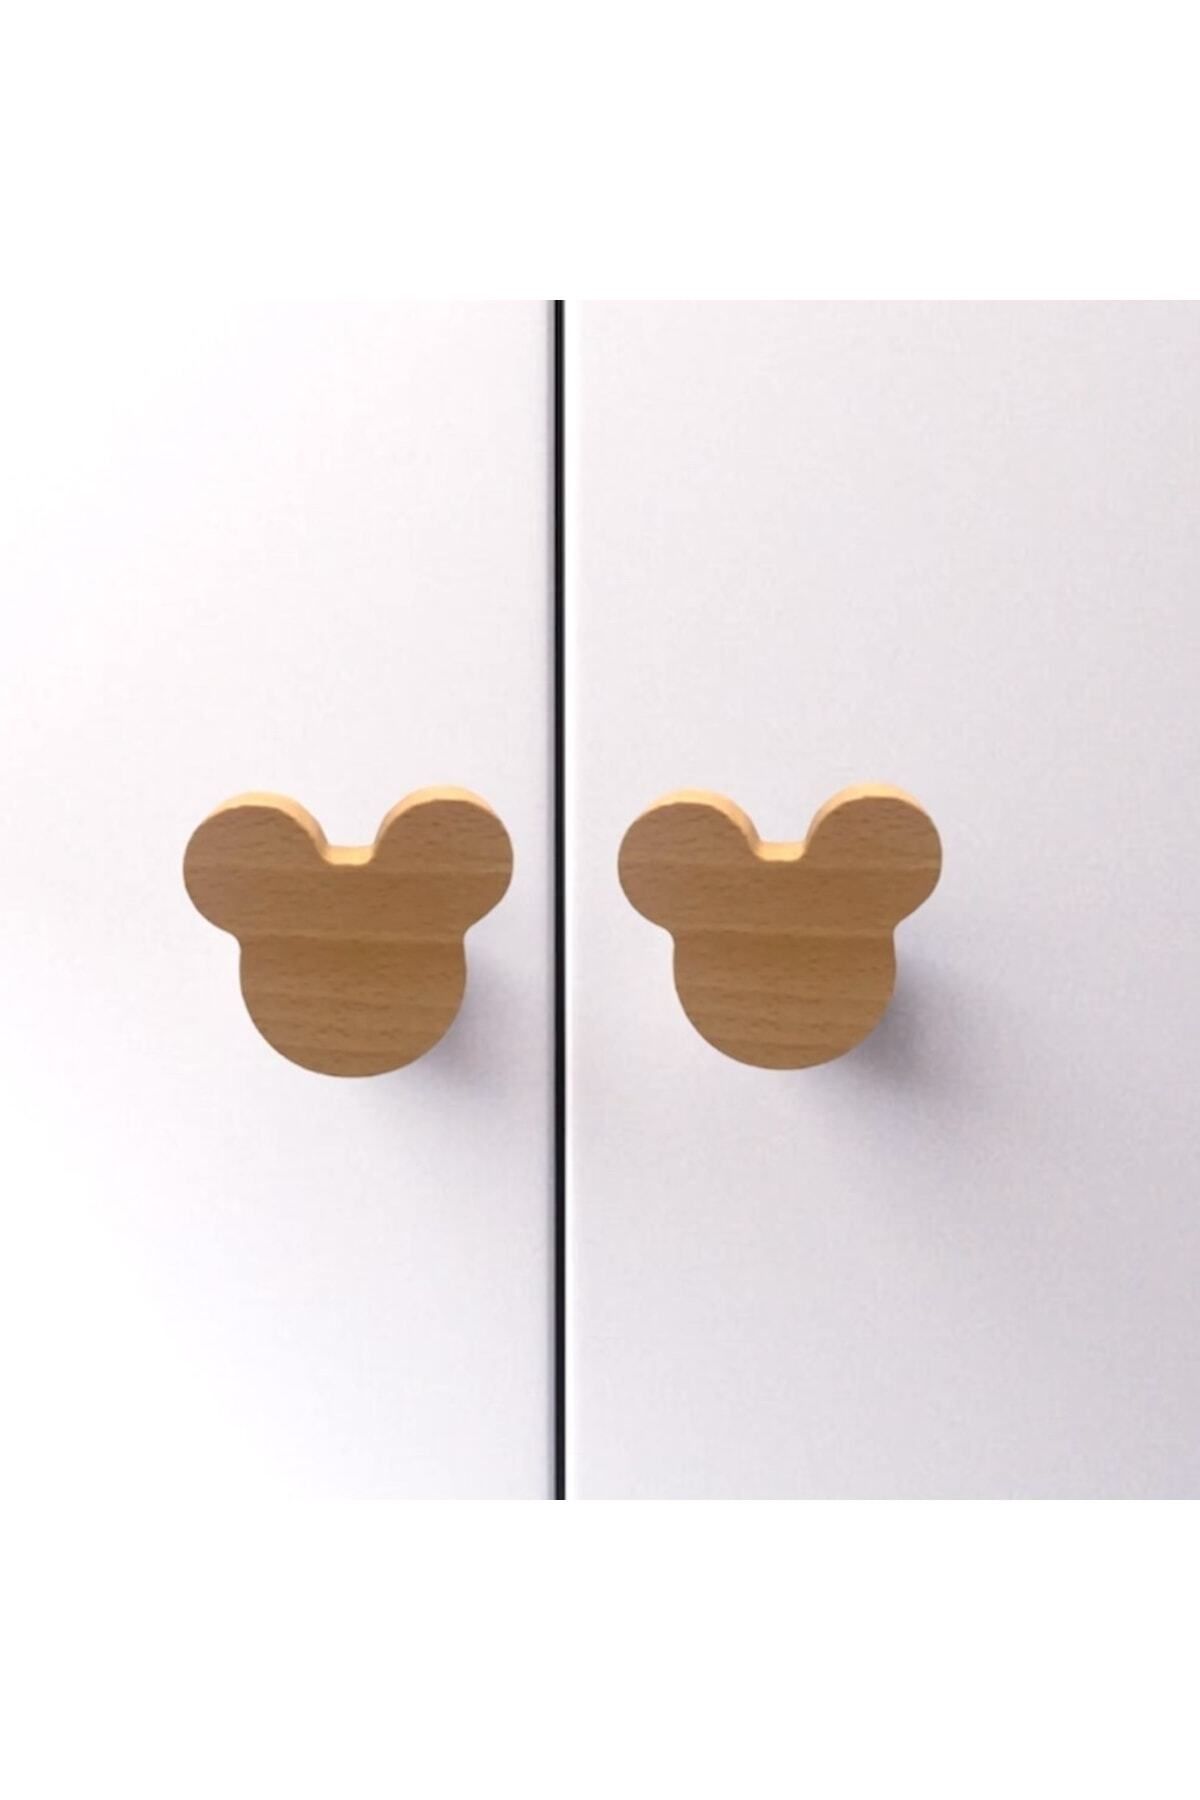 AFRALYAHOME 2 Adet! Mickey Mouse, Minnie Mouse Bebek Odası Ahşap Çekmece/dolap Kulpu Miki Fare Çekmece Kulp